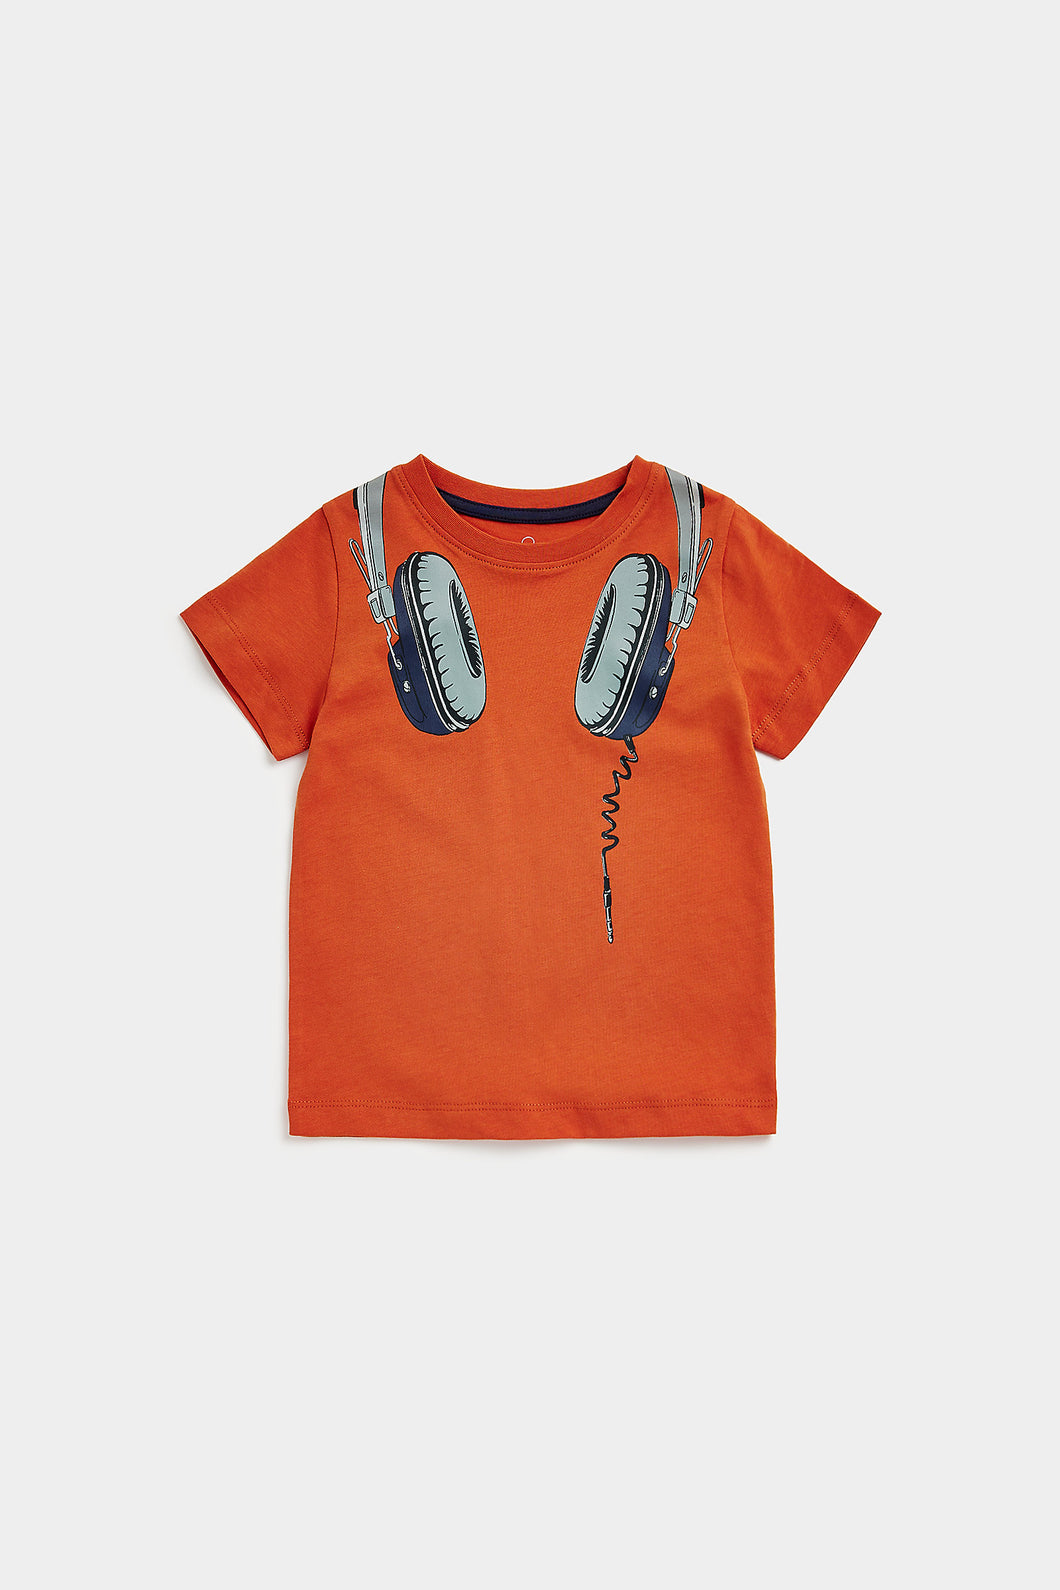 Mothercare Headphones T-Shirt